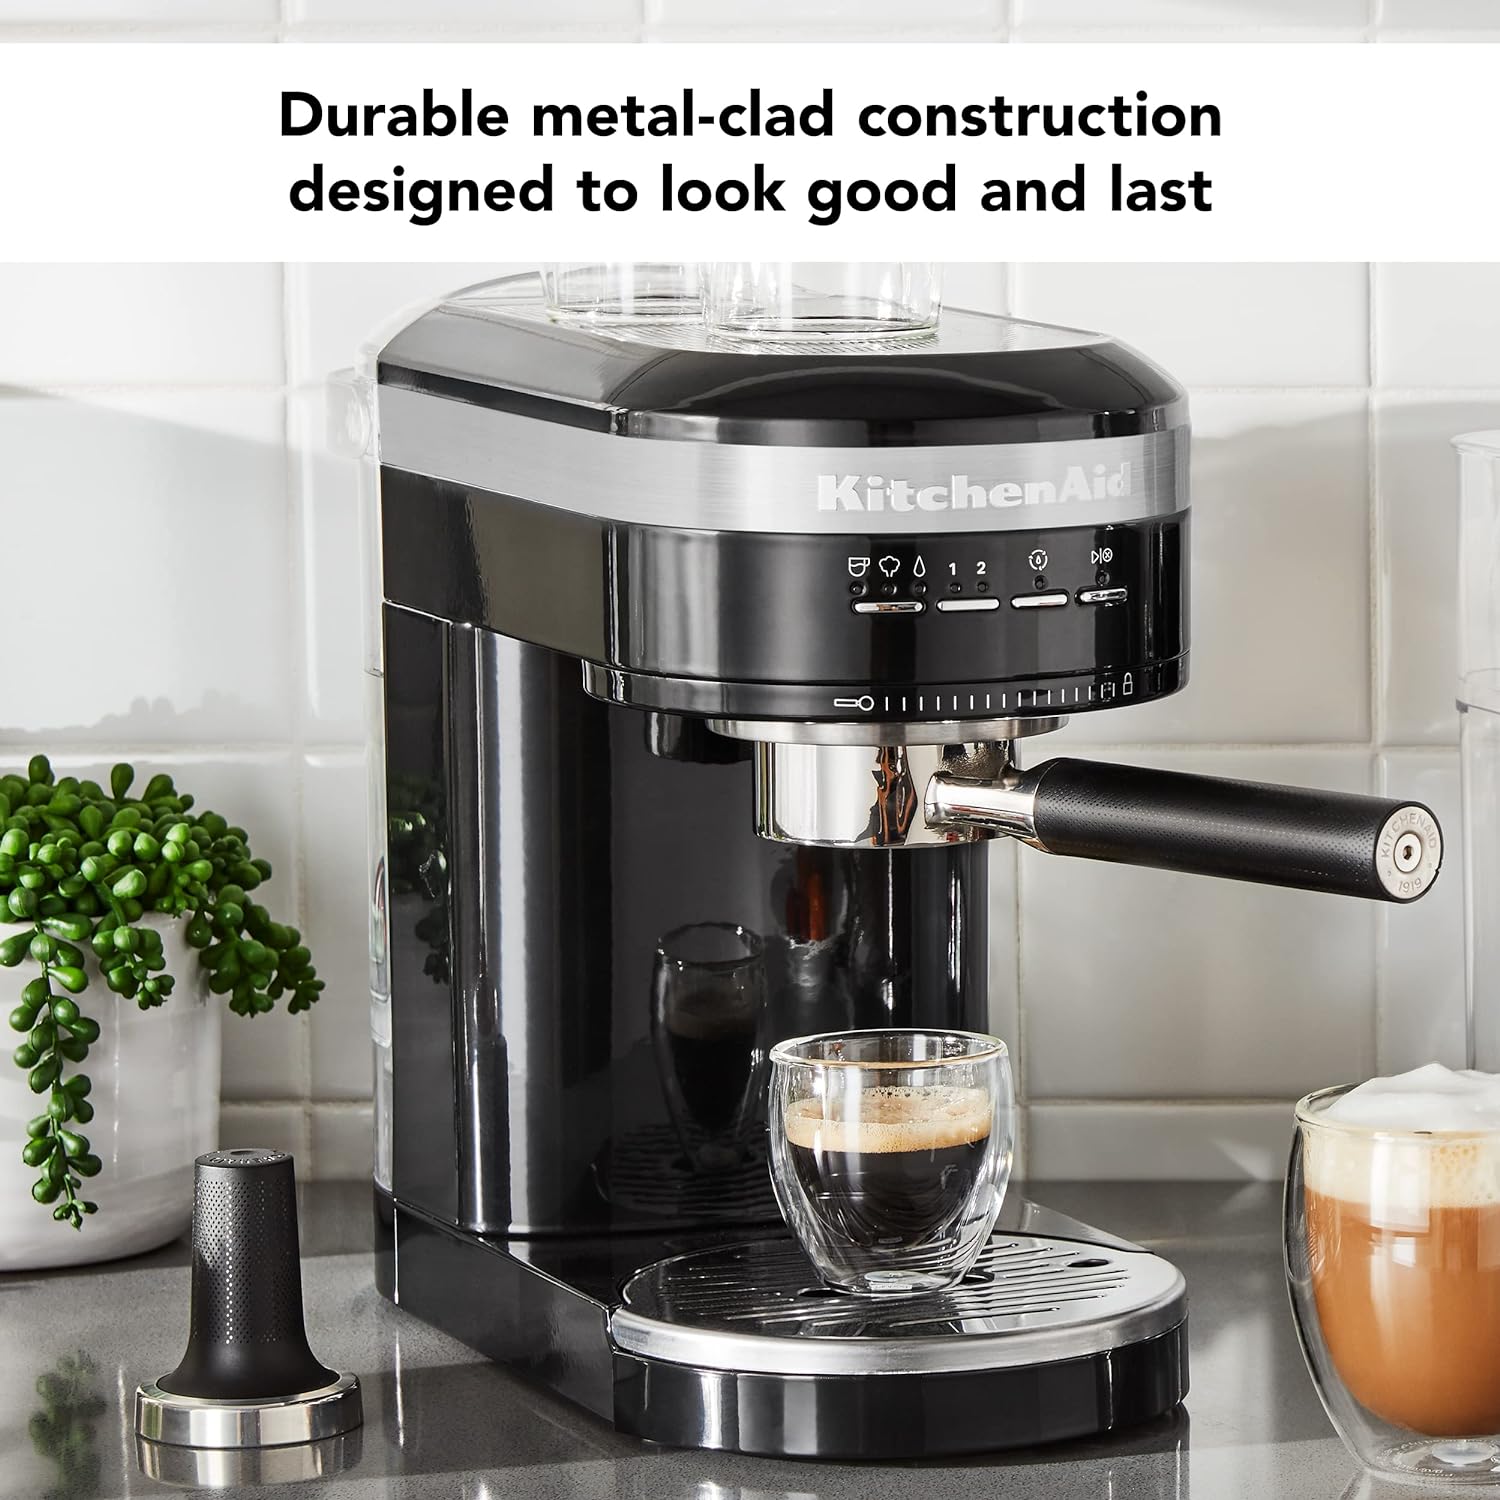 KitchenAid Semi-Automatic Espresso Machine KES6403, Black Matte, 1.4 Liters